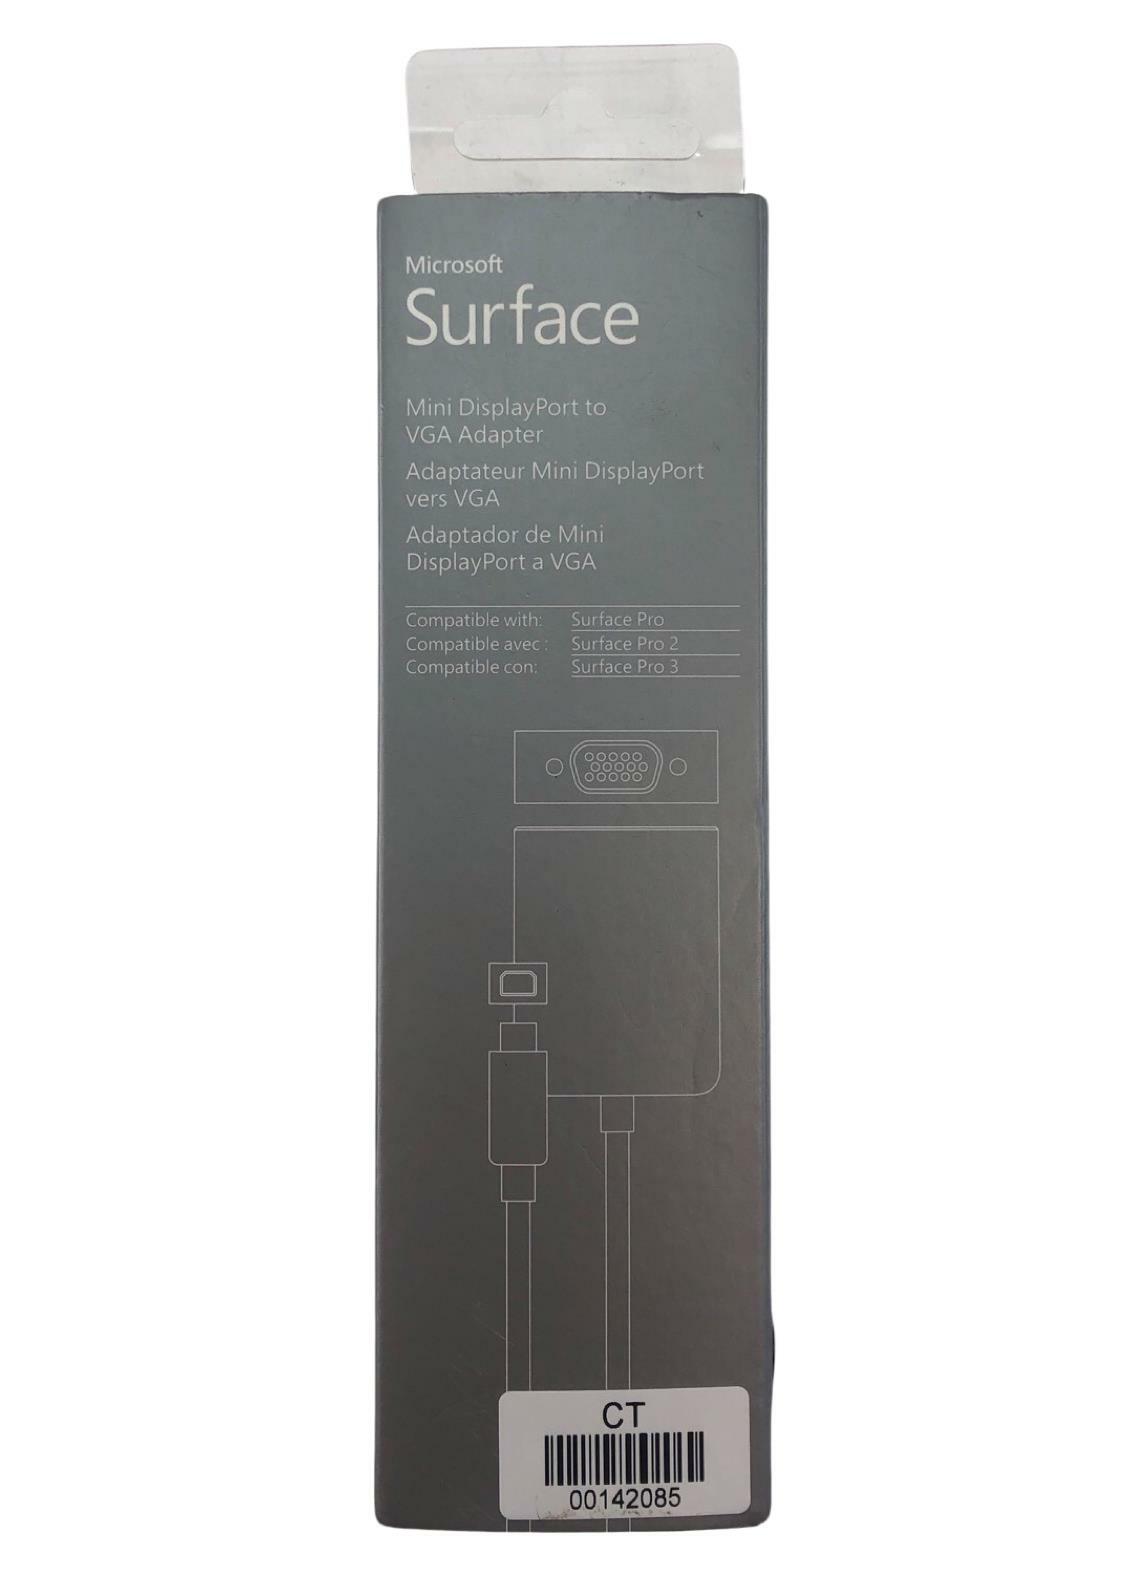 NEW - Open Box - Microsoft Surface Mini DisplayPort to VGA Adapter R7X-00018